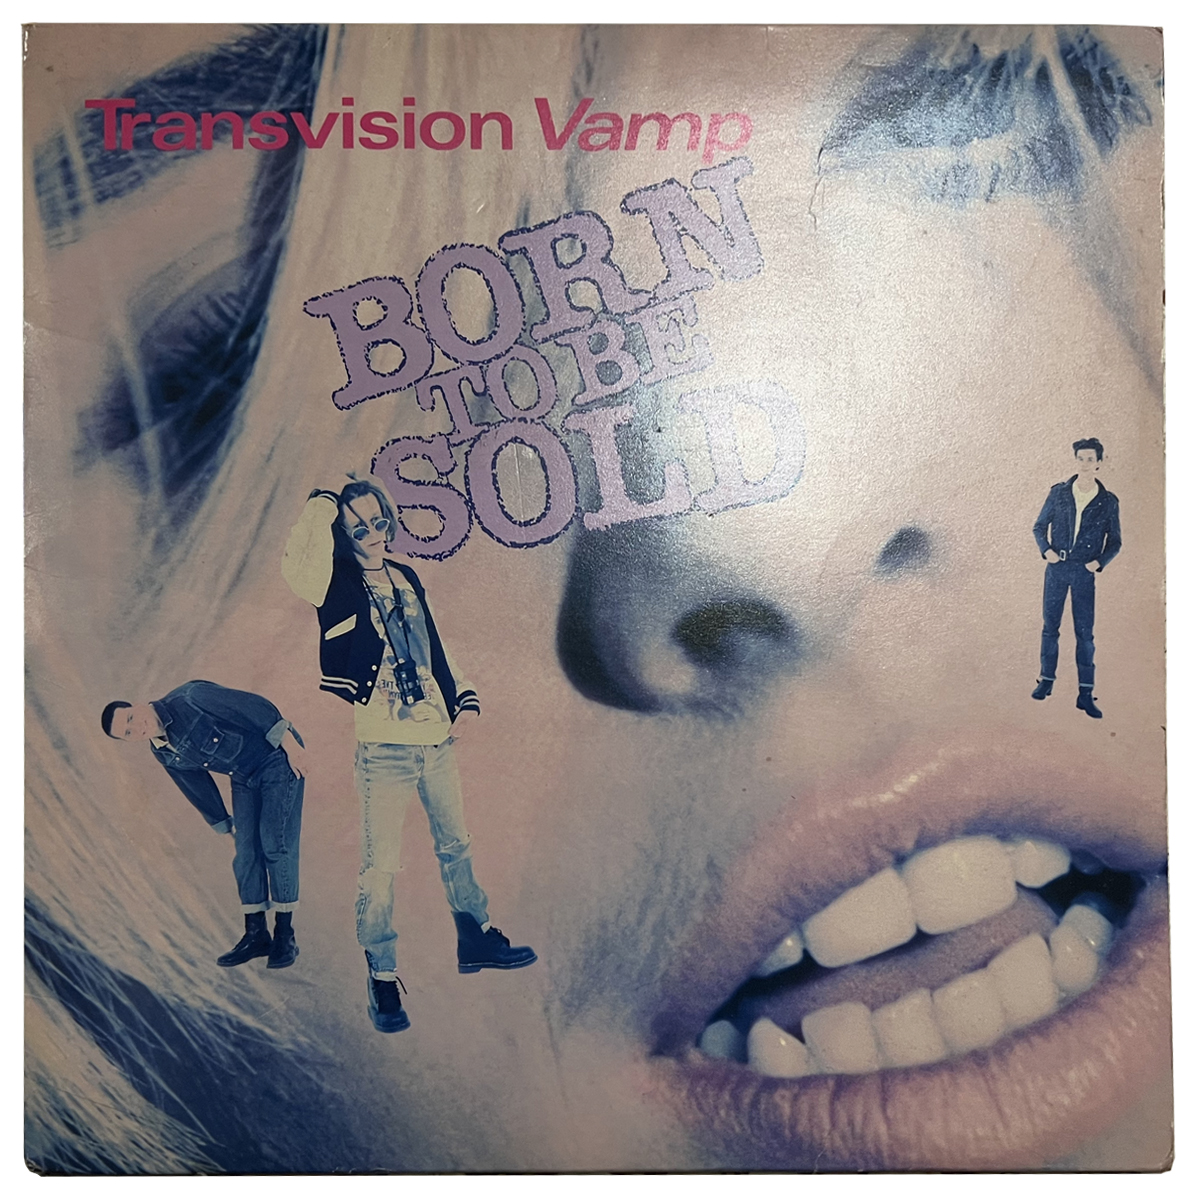 TRANSVISION VAMP ‘BORN TO BE SOLD’ MAXI SINGLE 12” VINYL 1989